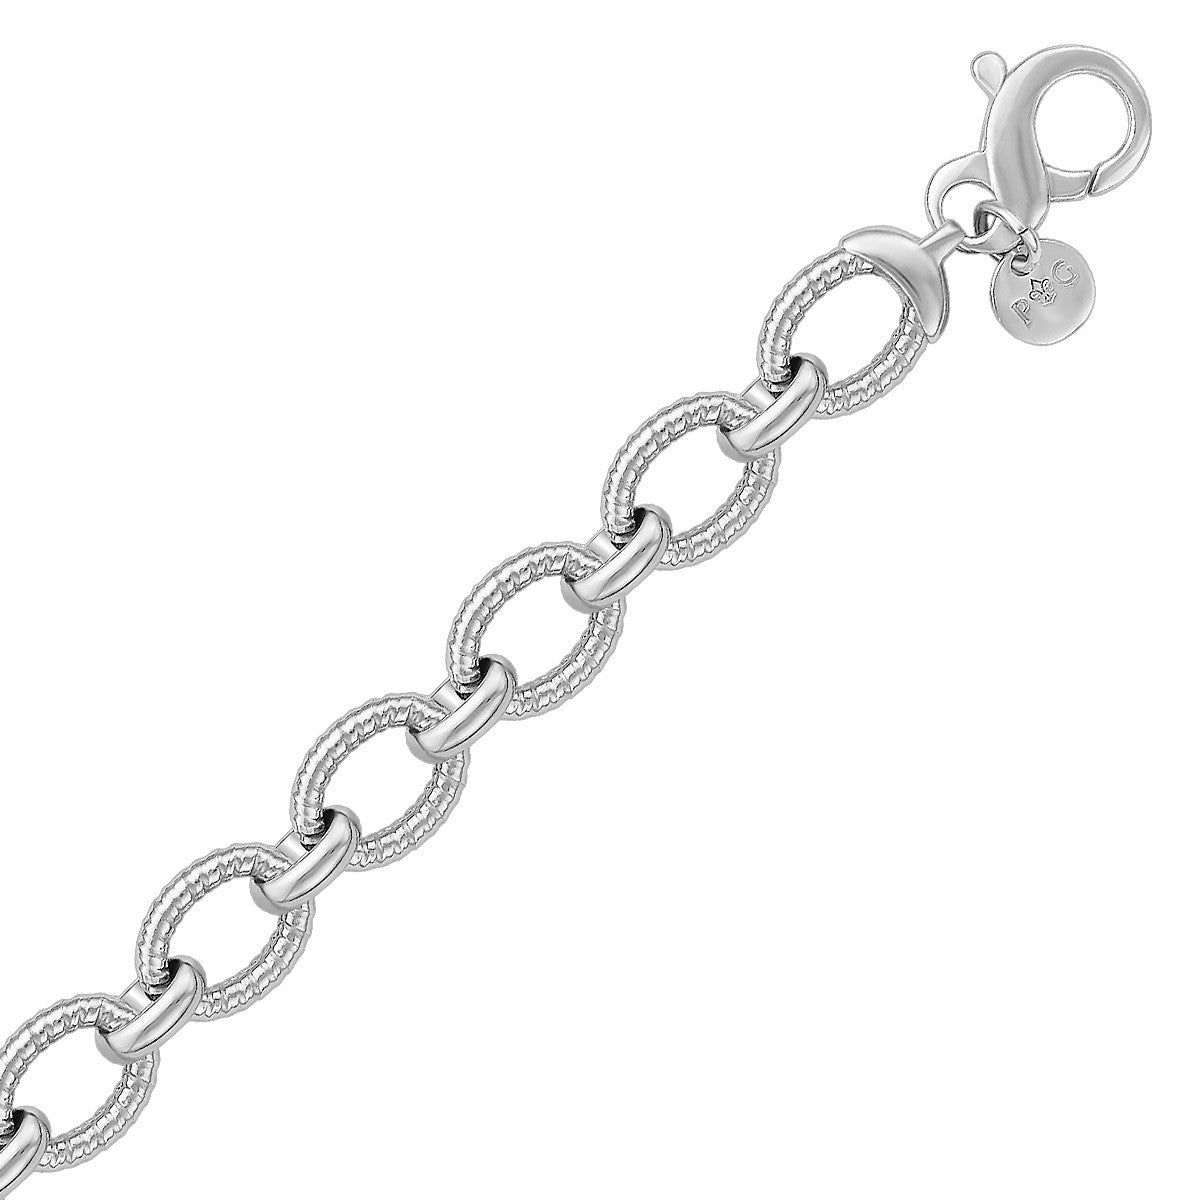 Oval Cable Design Chain Link Bracelet - Sterling Silver 9.65mm